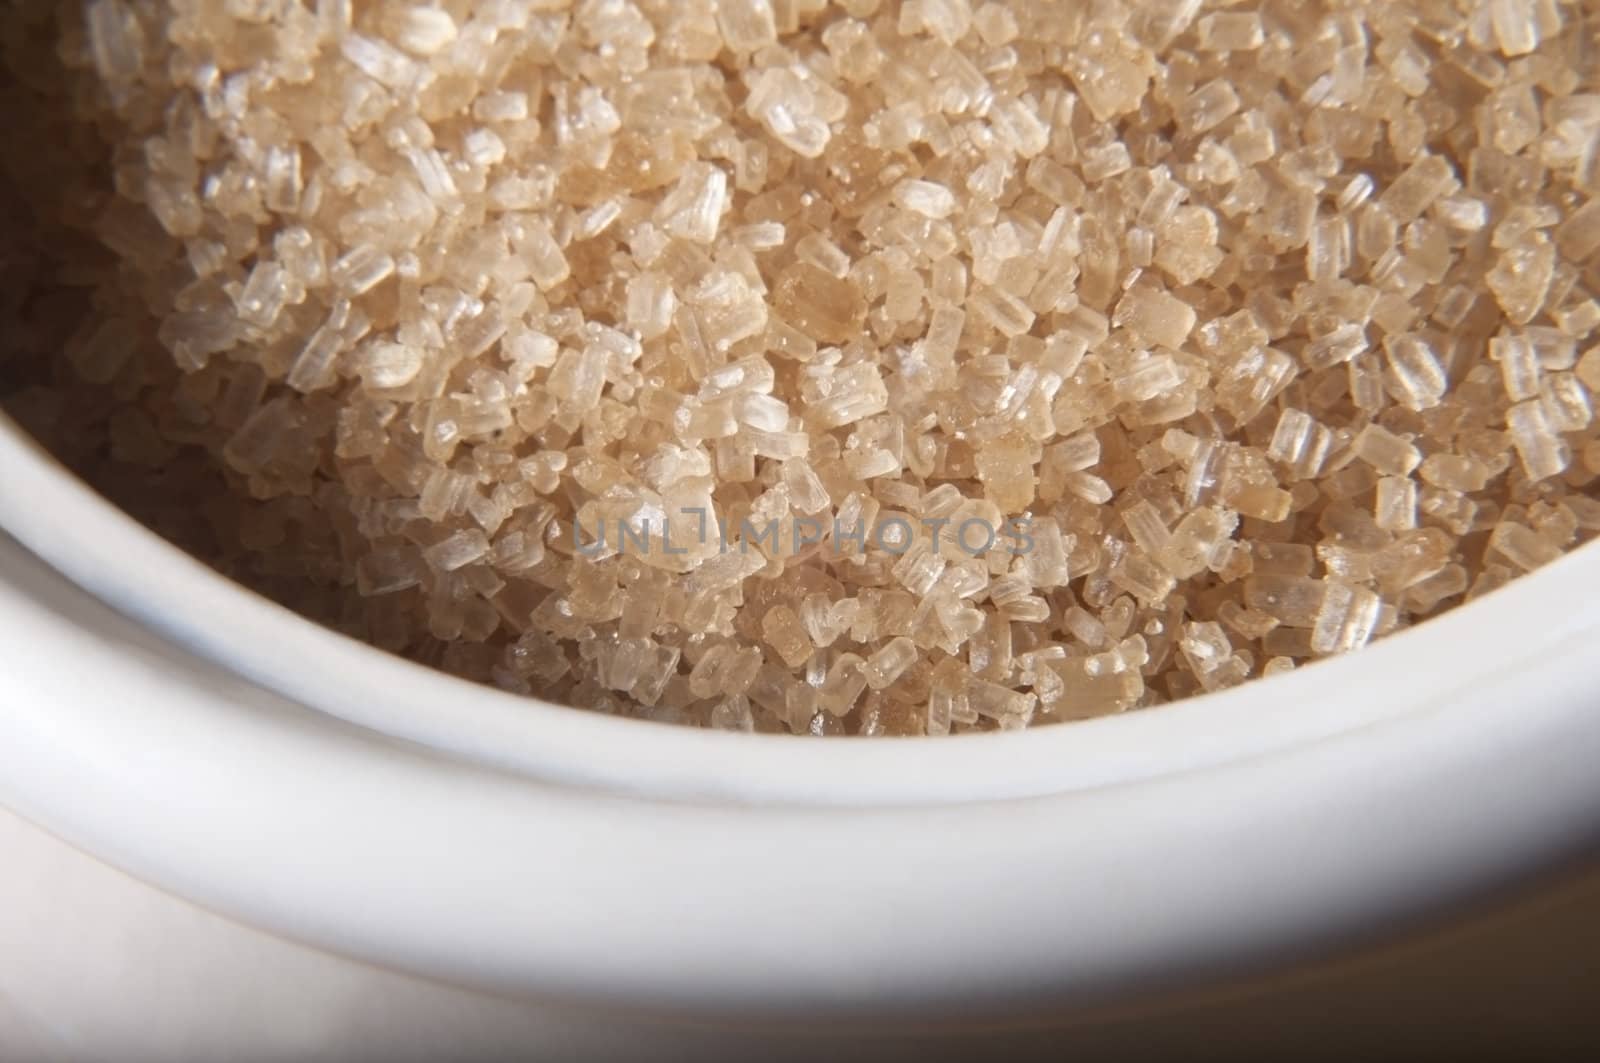 Close up (macro) of granulated brown sugar (demerera) in a cream coloured china bowl.